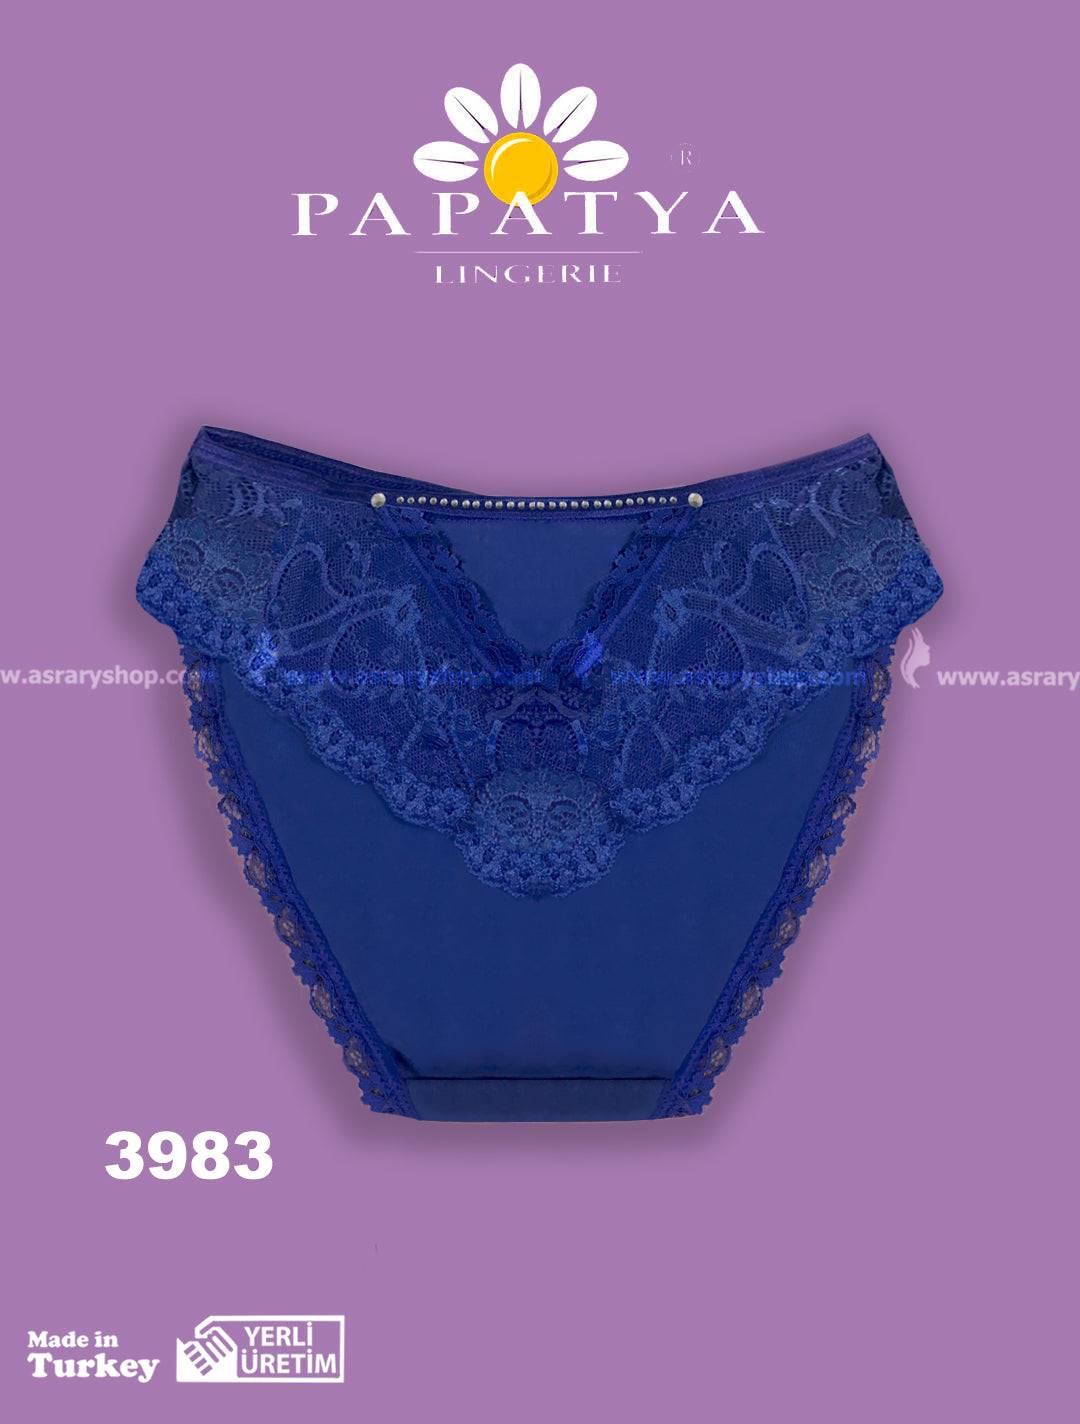 Papatya Cotton and Lace Panty 3983 M-L